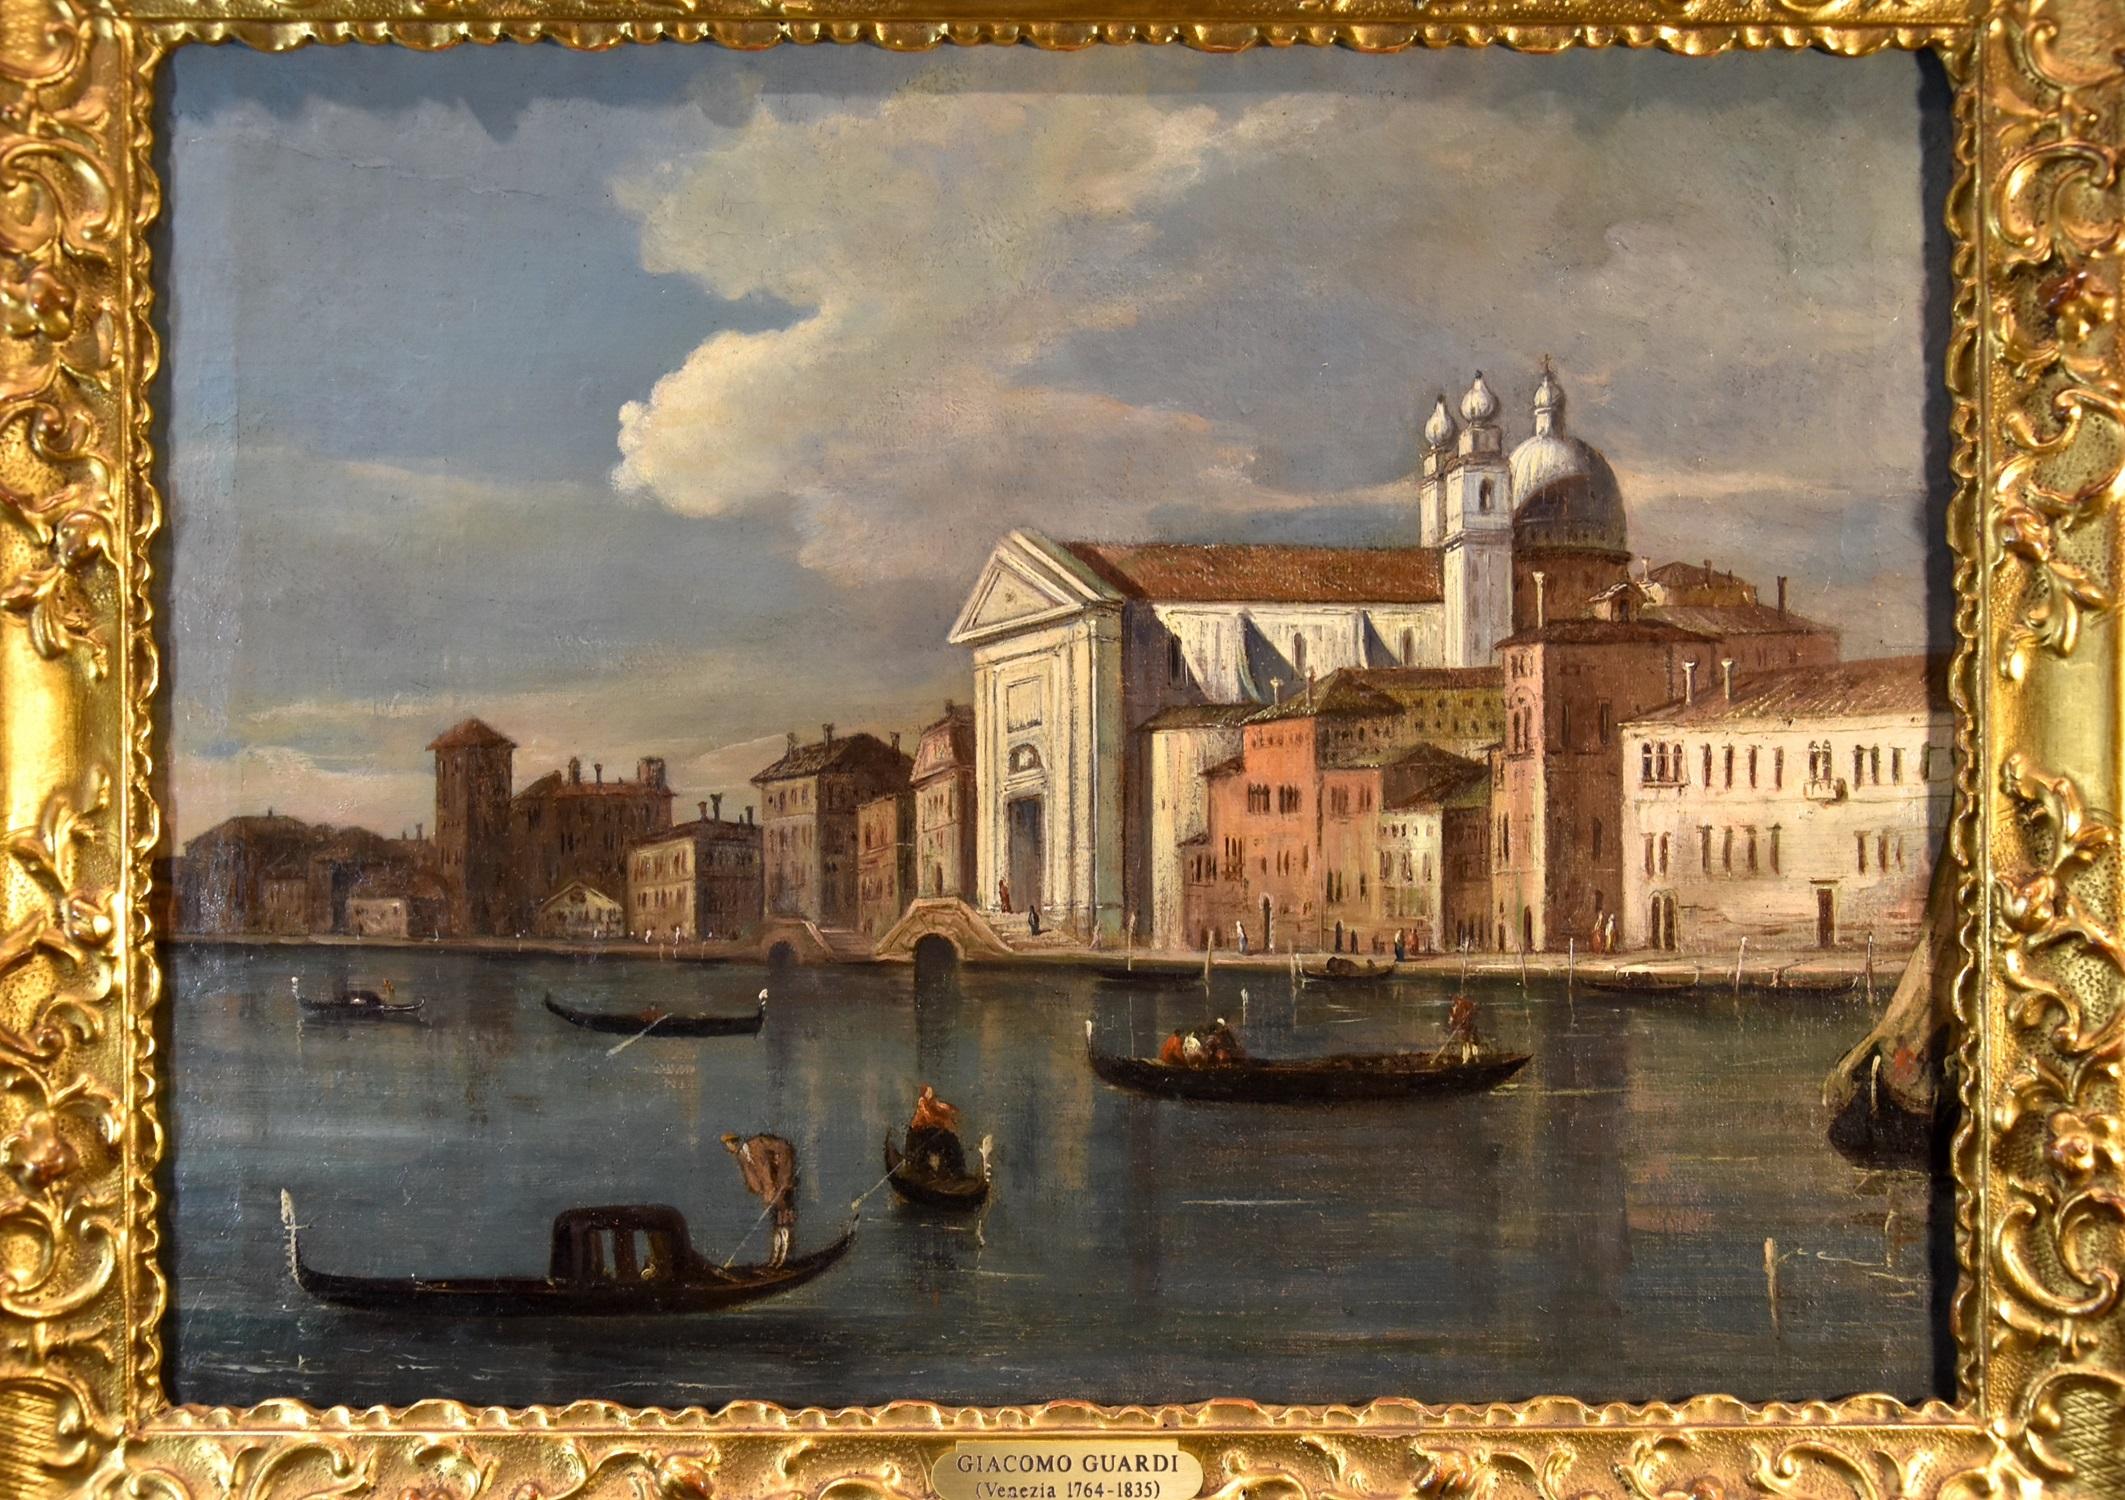 Ansicht Venedig Siehe Giudecca Guardi 18/19. Jahrhundert Gemälde Öl auf Leinwand Alter Meister (Alte Meister), Painting, von Giacomo Guardi (venice, 1764 - 1835)